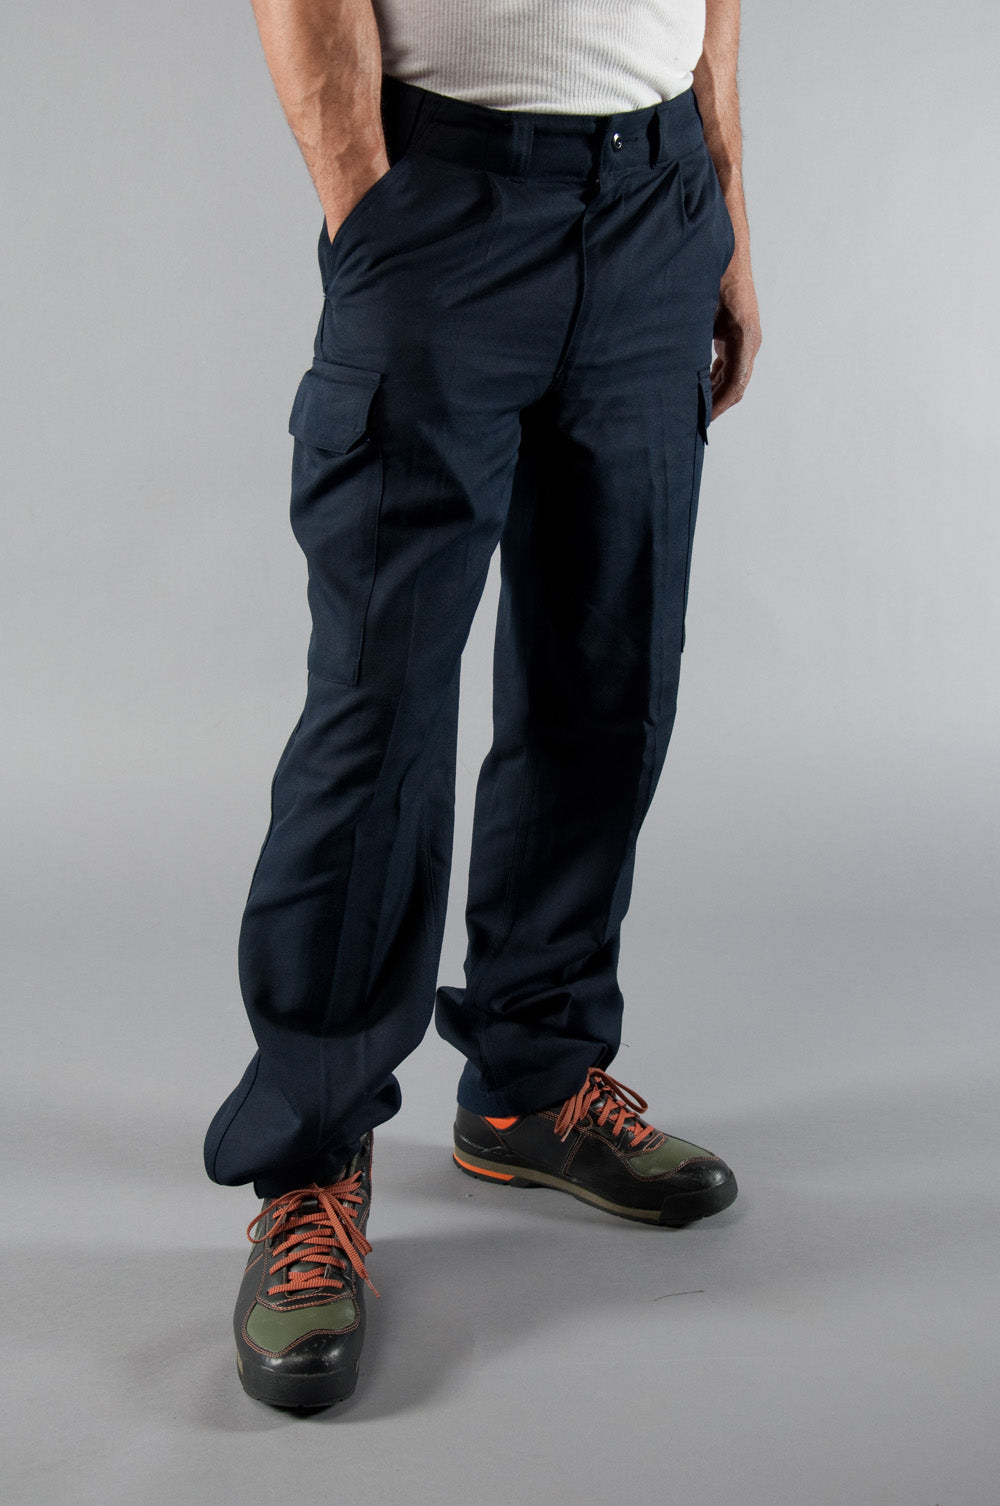 TRGPSG Men's Cargo Pants with 8 Pockets Cotton Cargo Work Pants(No Belt), Blue 30x31 - Walmart.com